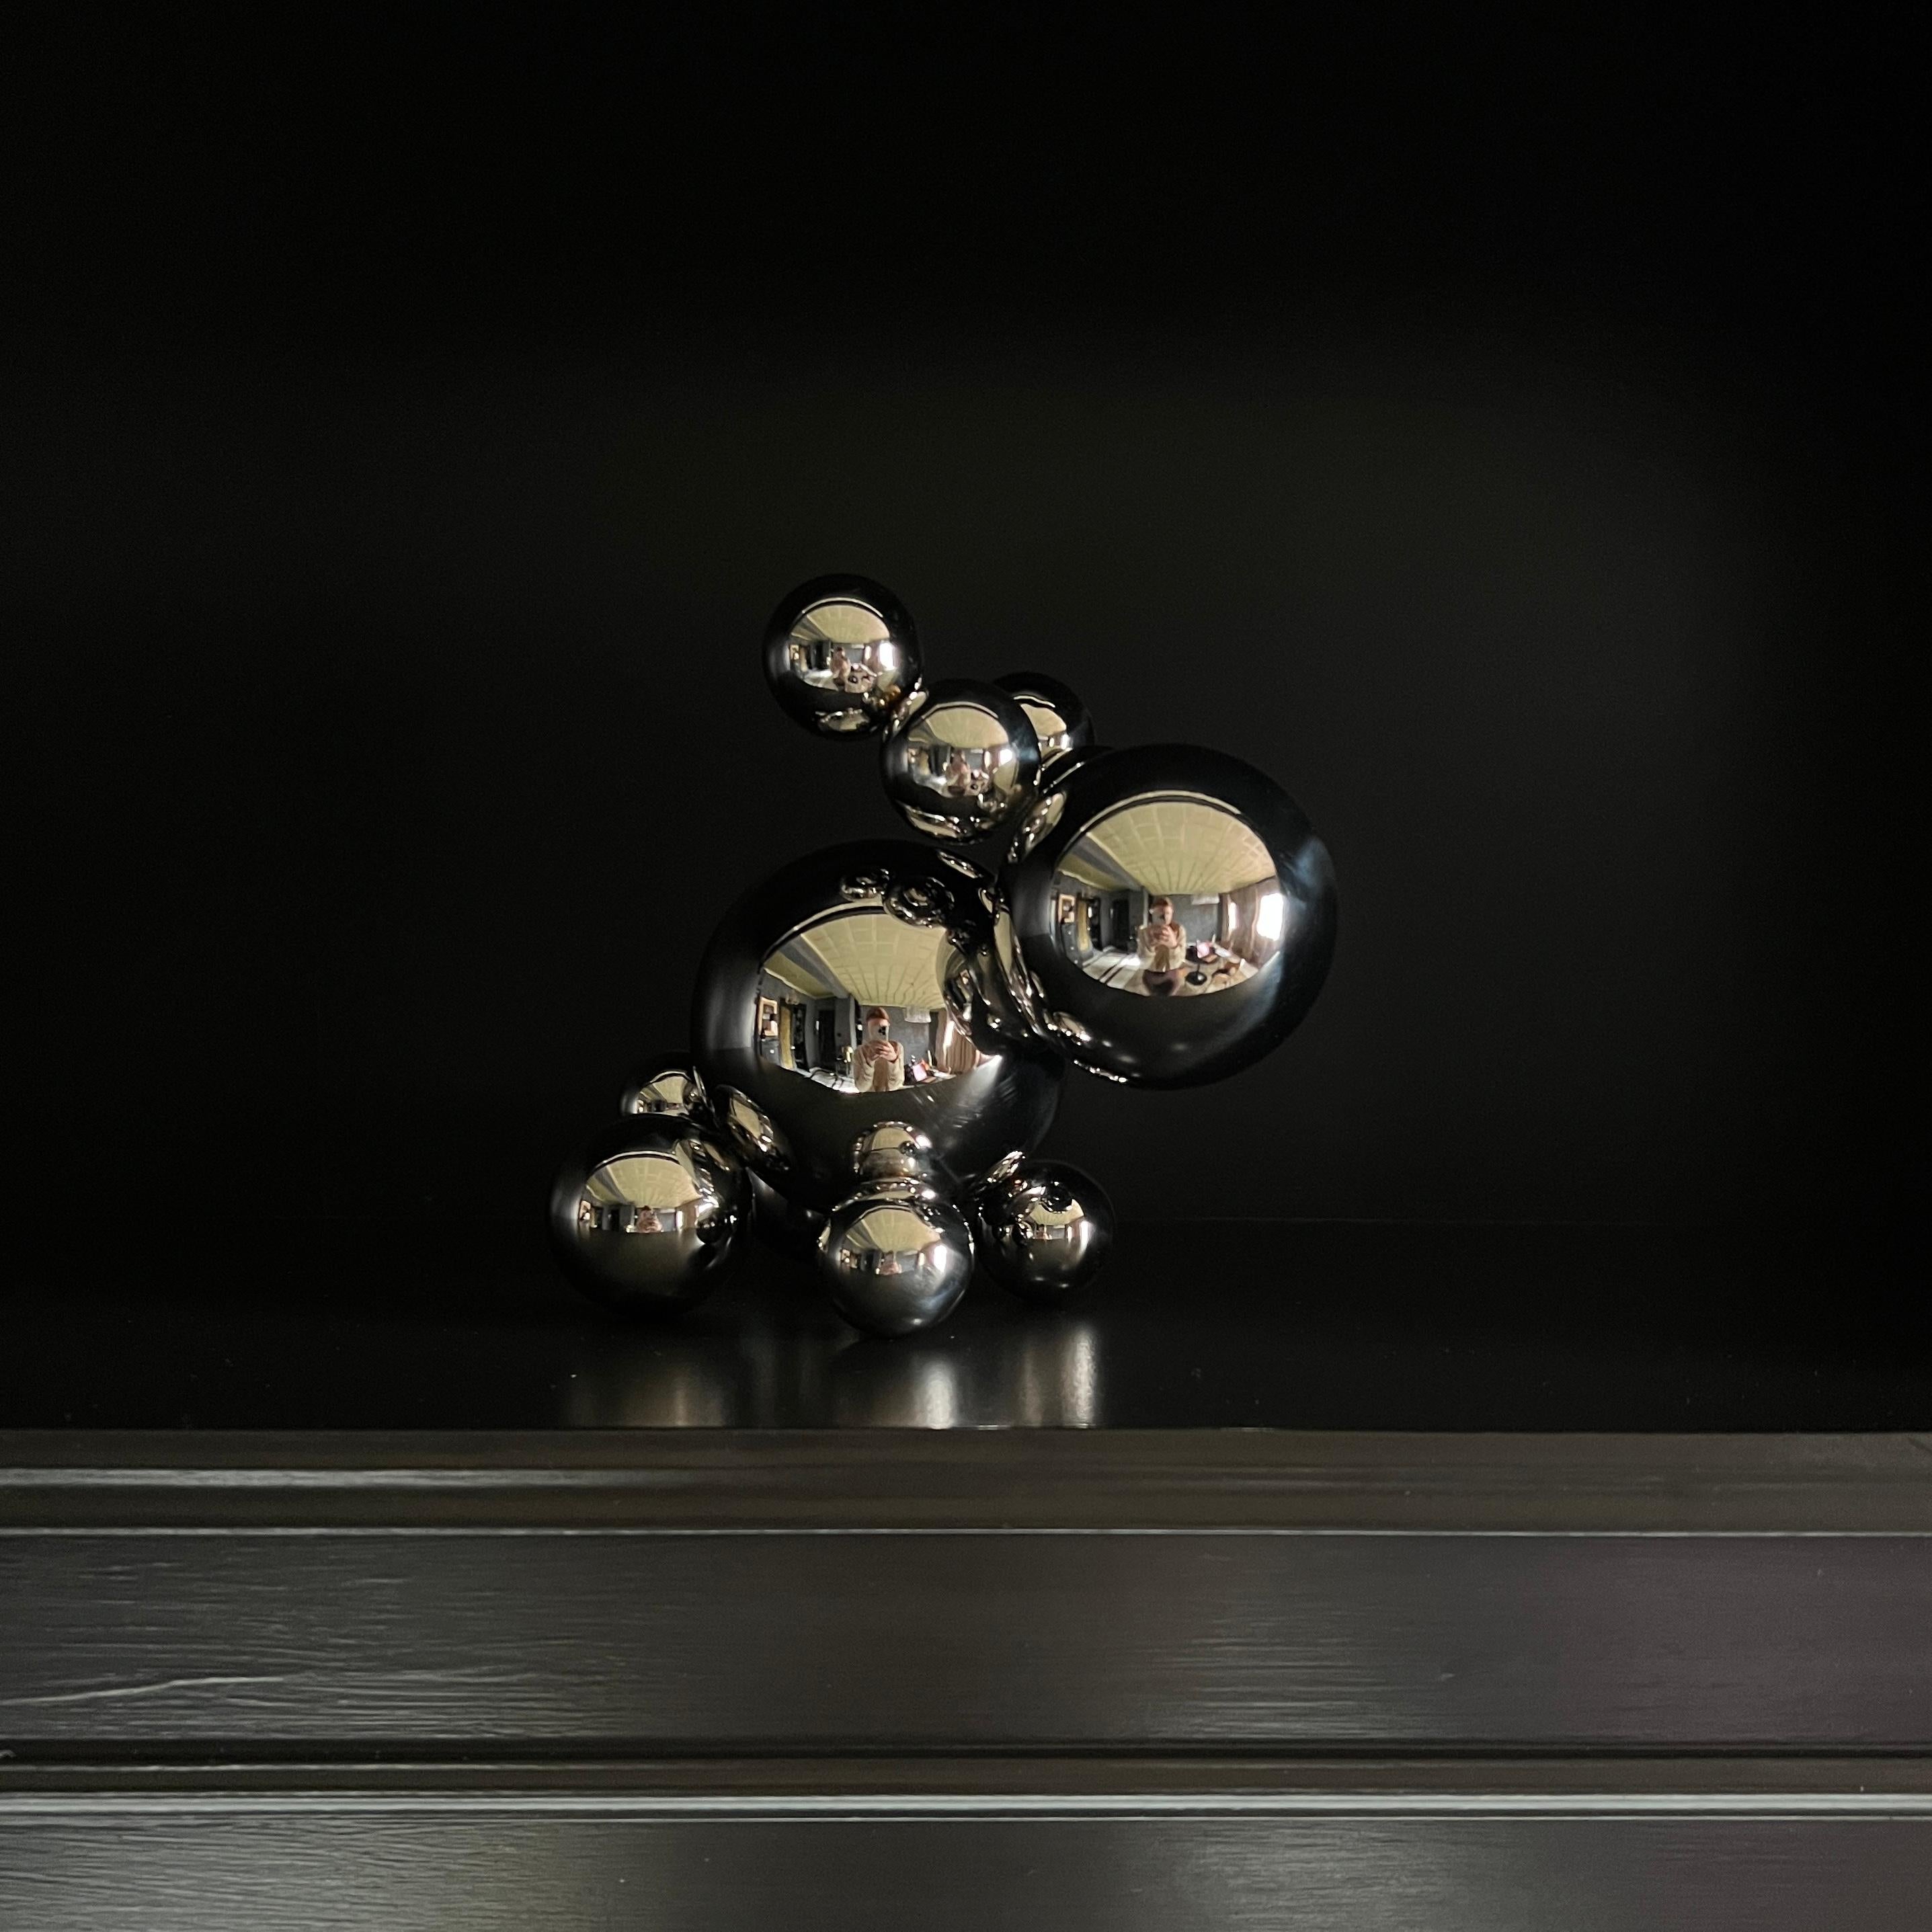 Stainless Steel Rabbit Bunny Robot 'Wait...' Minimalistic Art 6